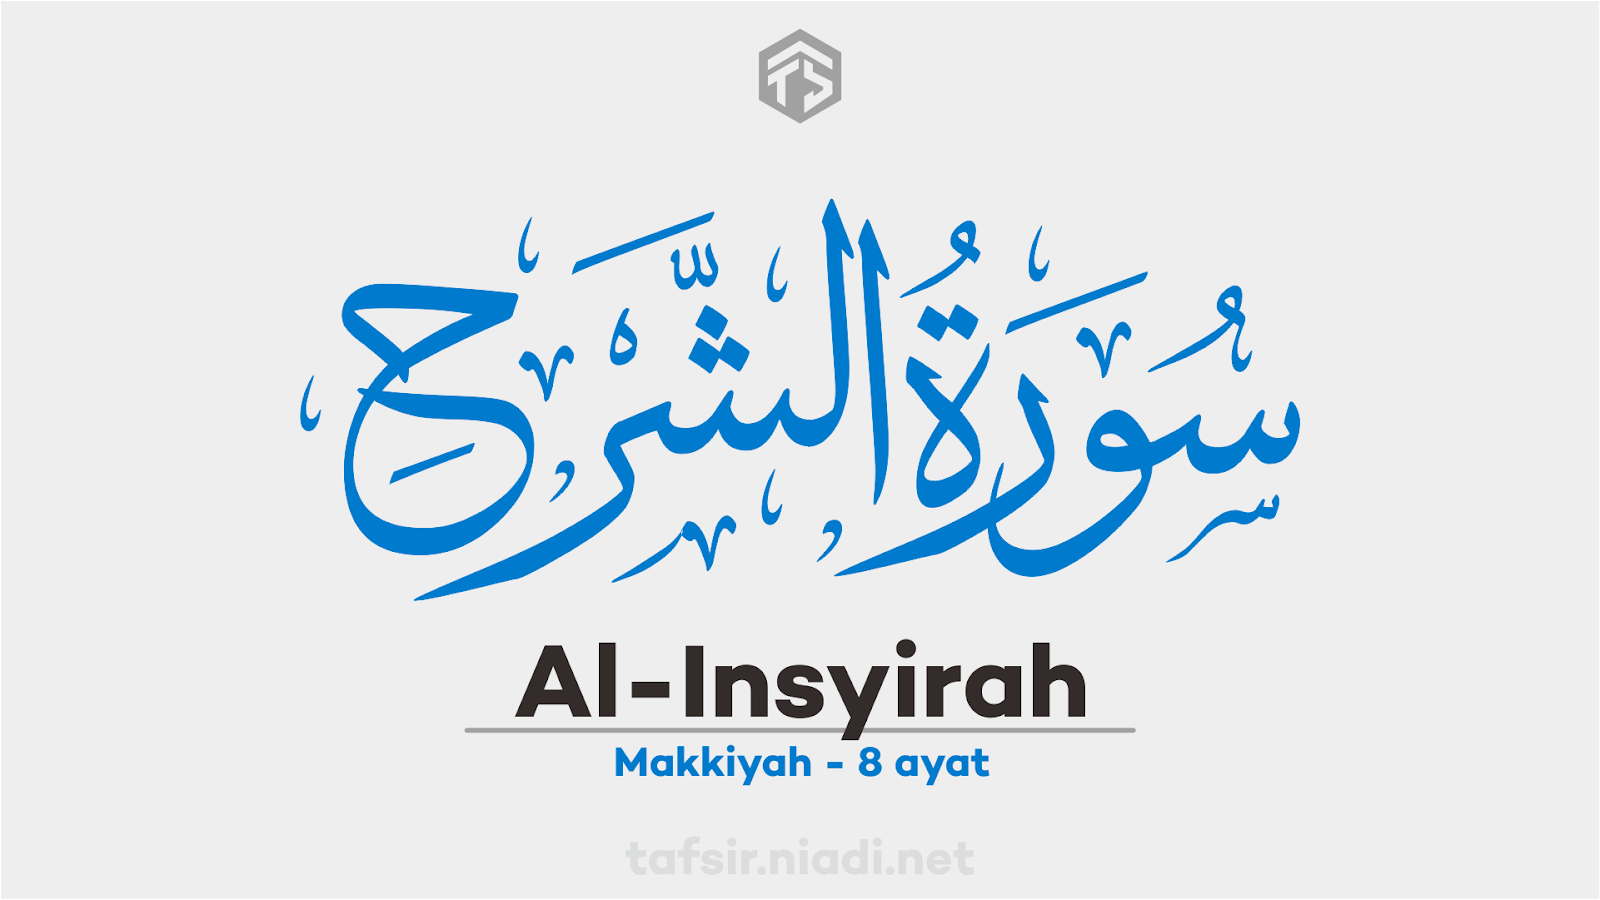 Tafsir Alquran Surah Al-Insyirah Ayat ke-3. Website Alquran online cepat, ringan, dan hemat kuota, lengkap dengan teks arab, latin, terjemah, dan tafsir bahasa Indonesia - tafsir.niadi.net